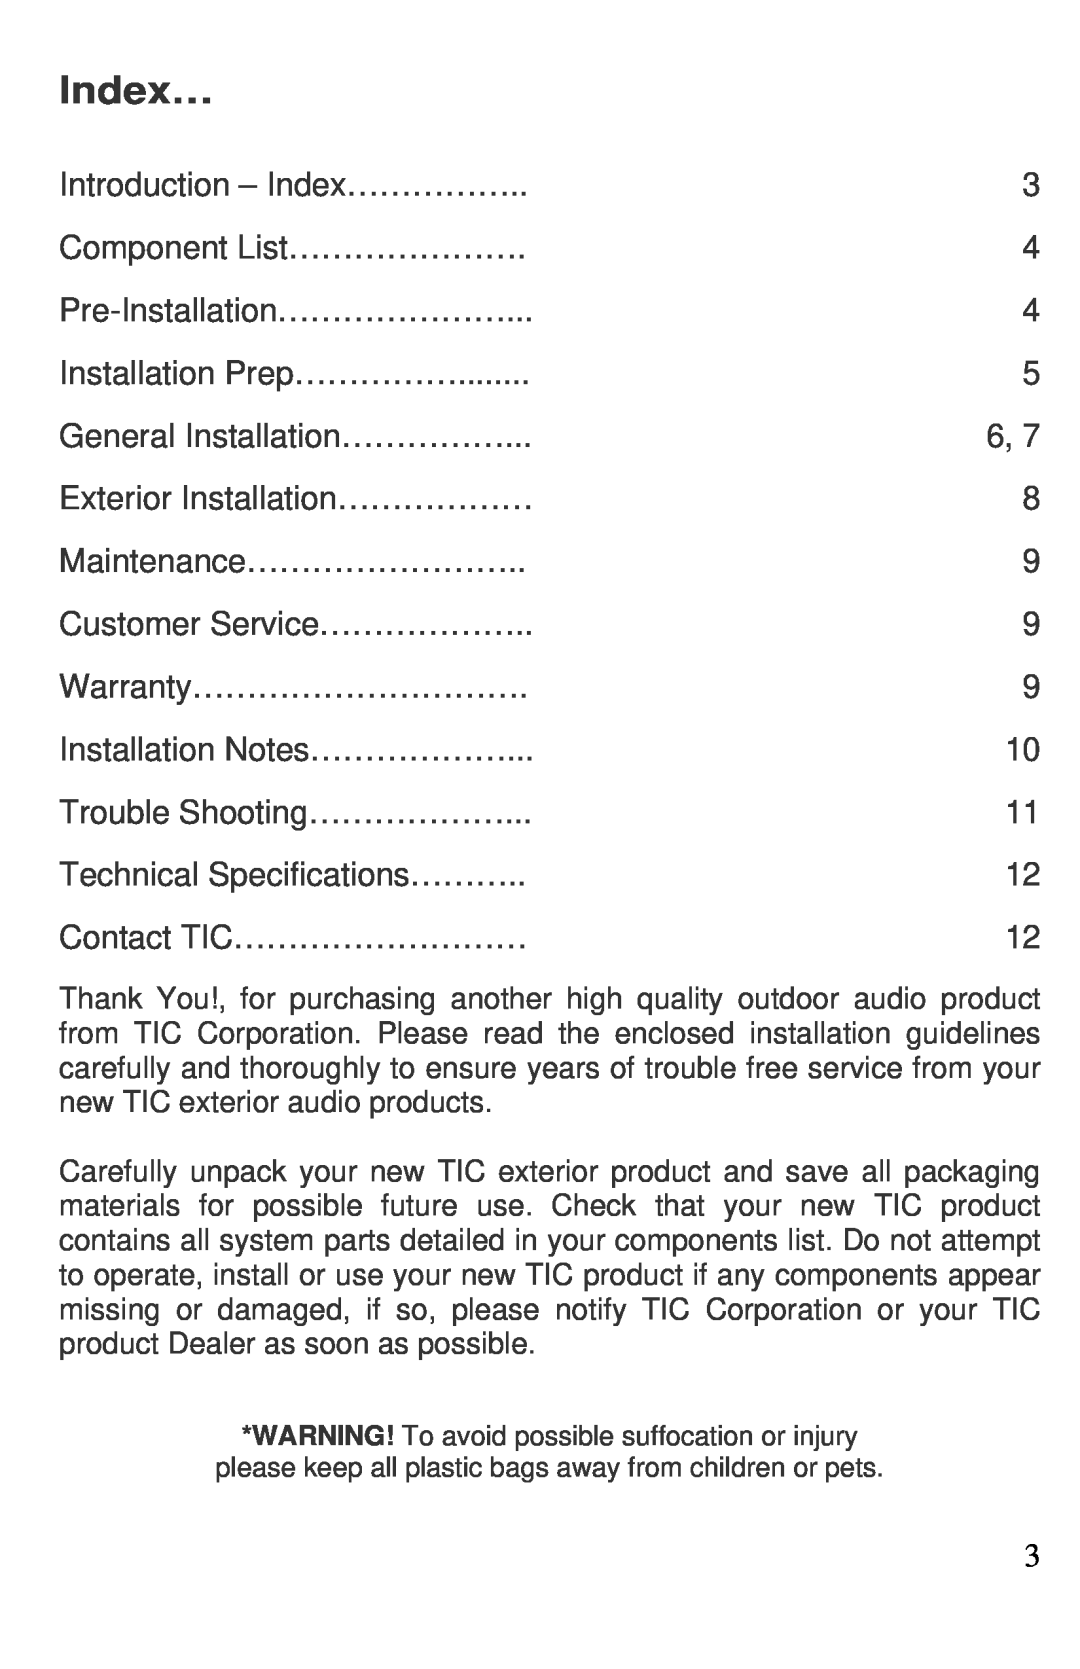 TIC WRS010 manual Index…, Installation Prep…………… 